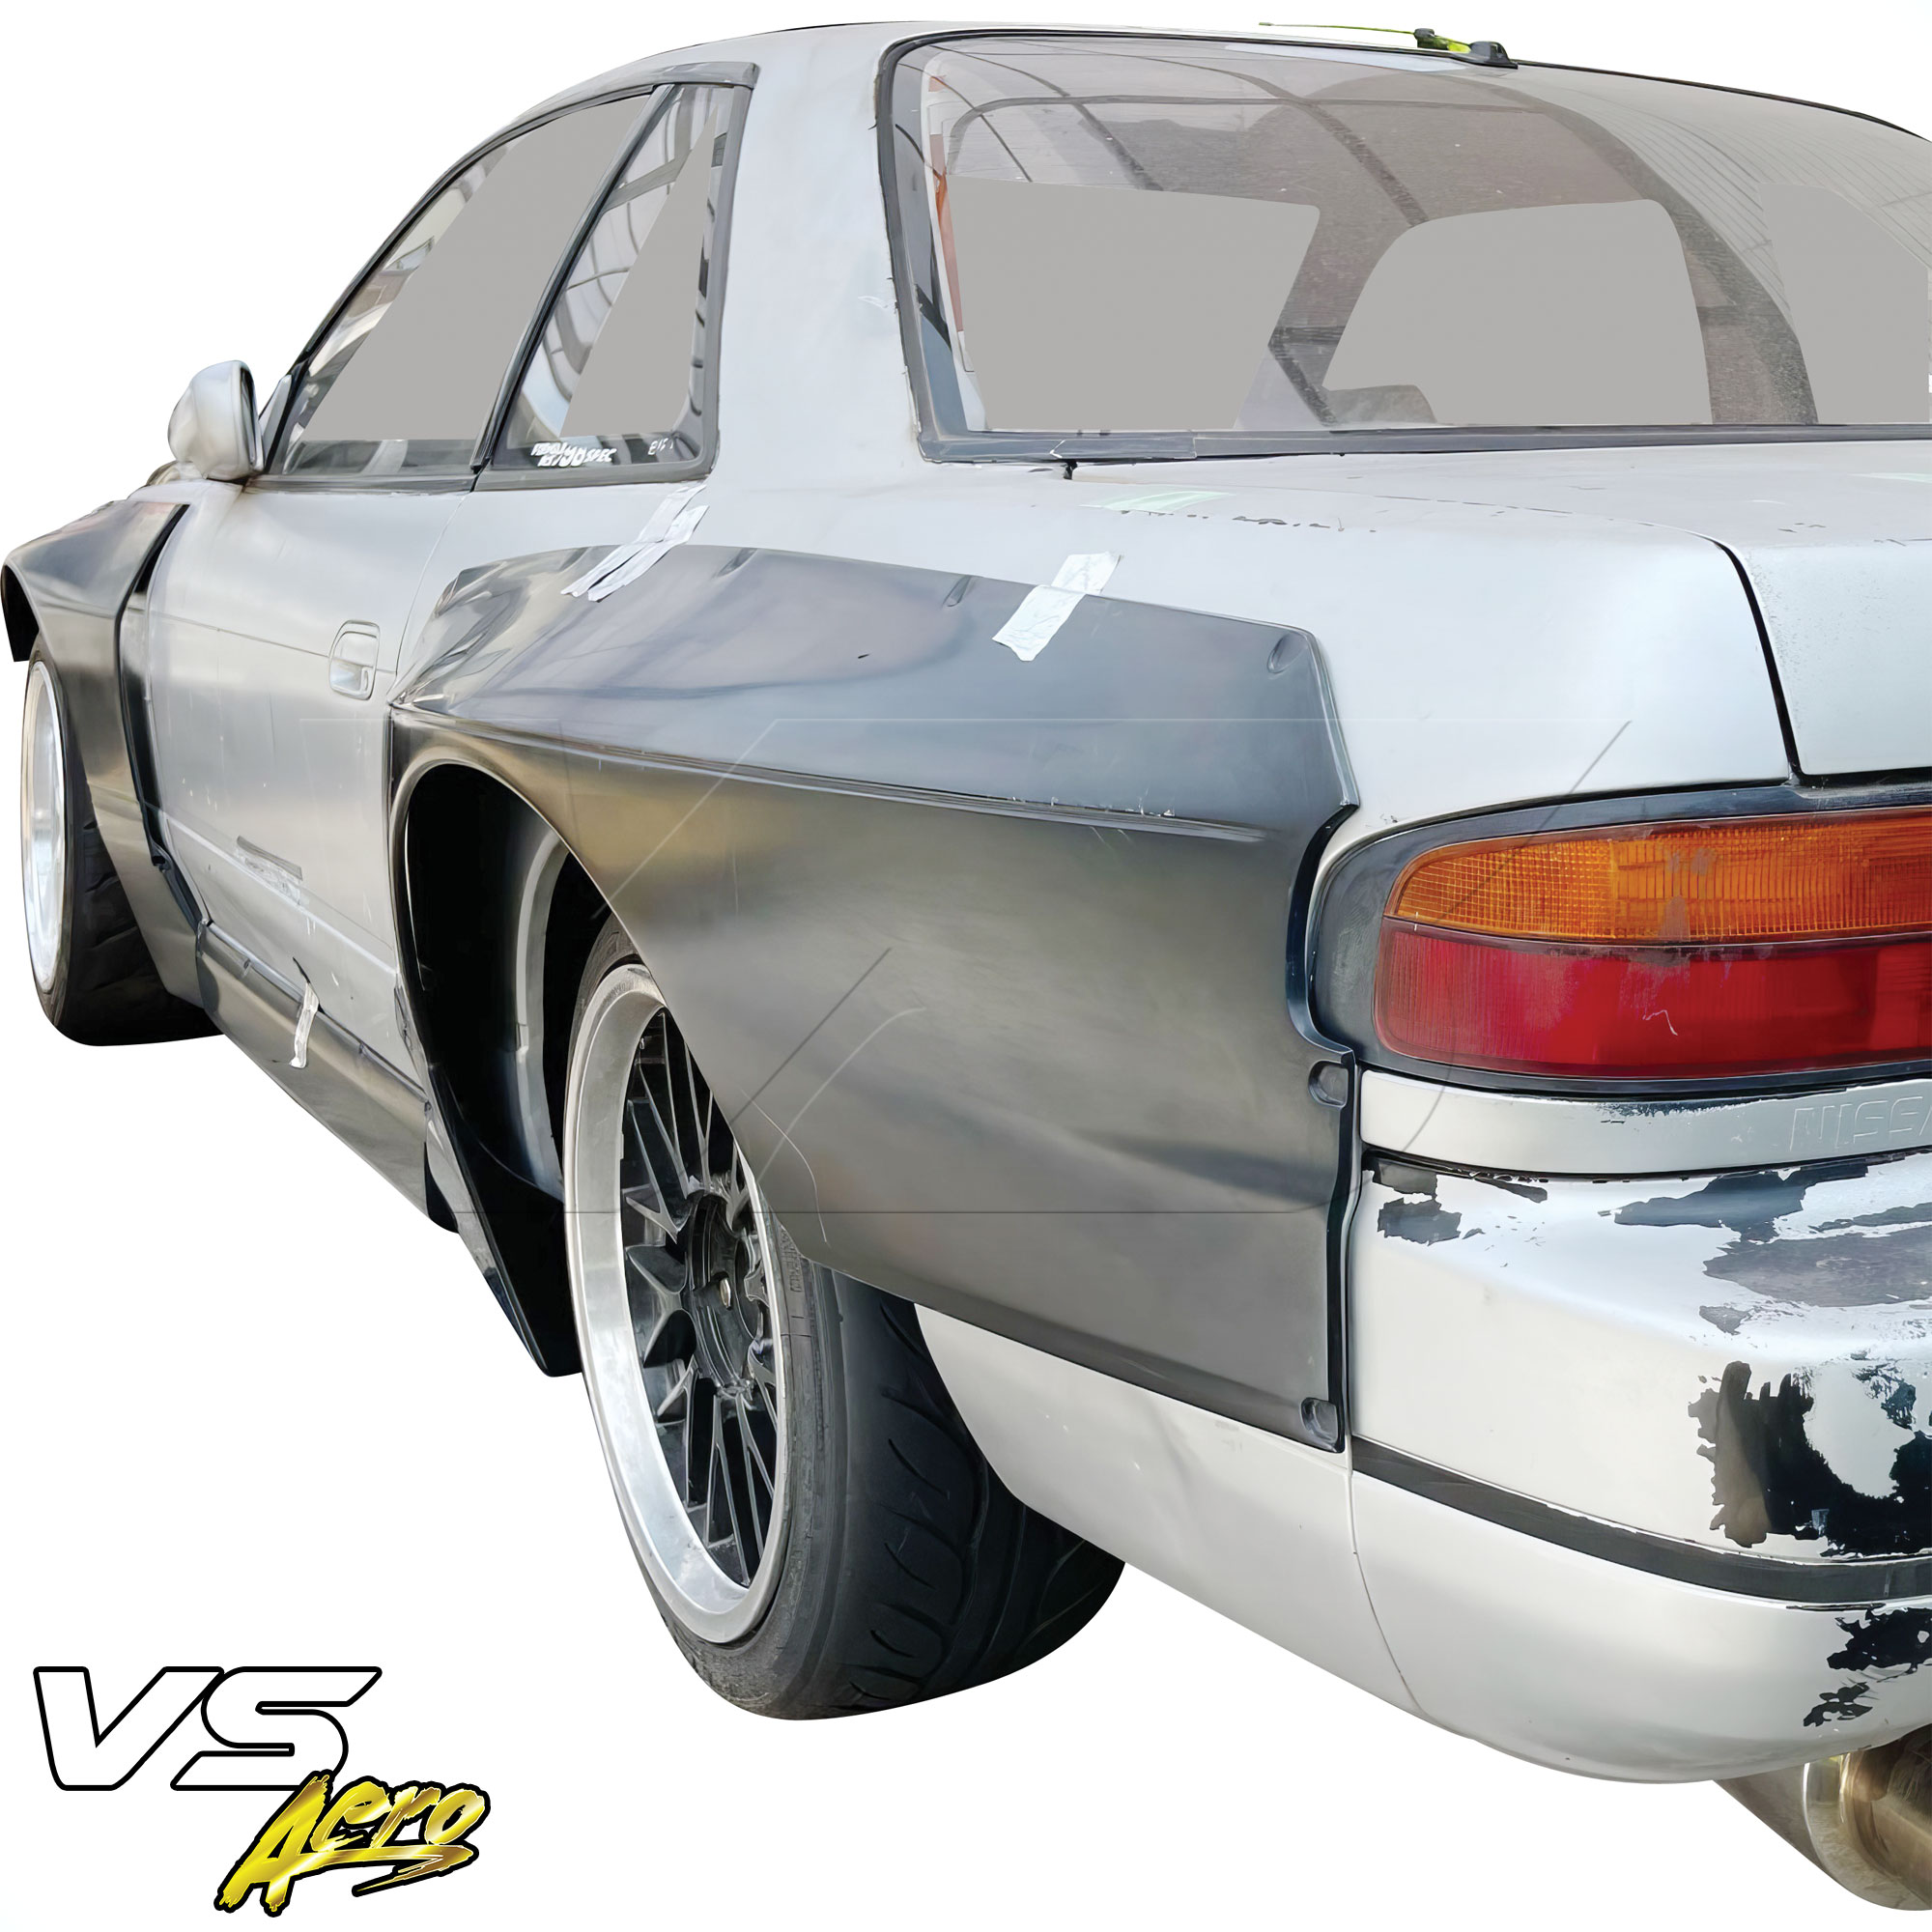 VSaero FRP TKYO v3 Wide Body 110mm Fenders (rear) > Nissan Silvia S13 1989-1994 > 2dr Coupe - Image 18